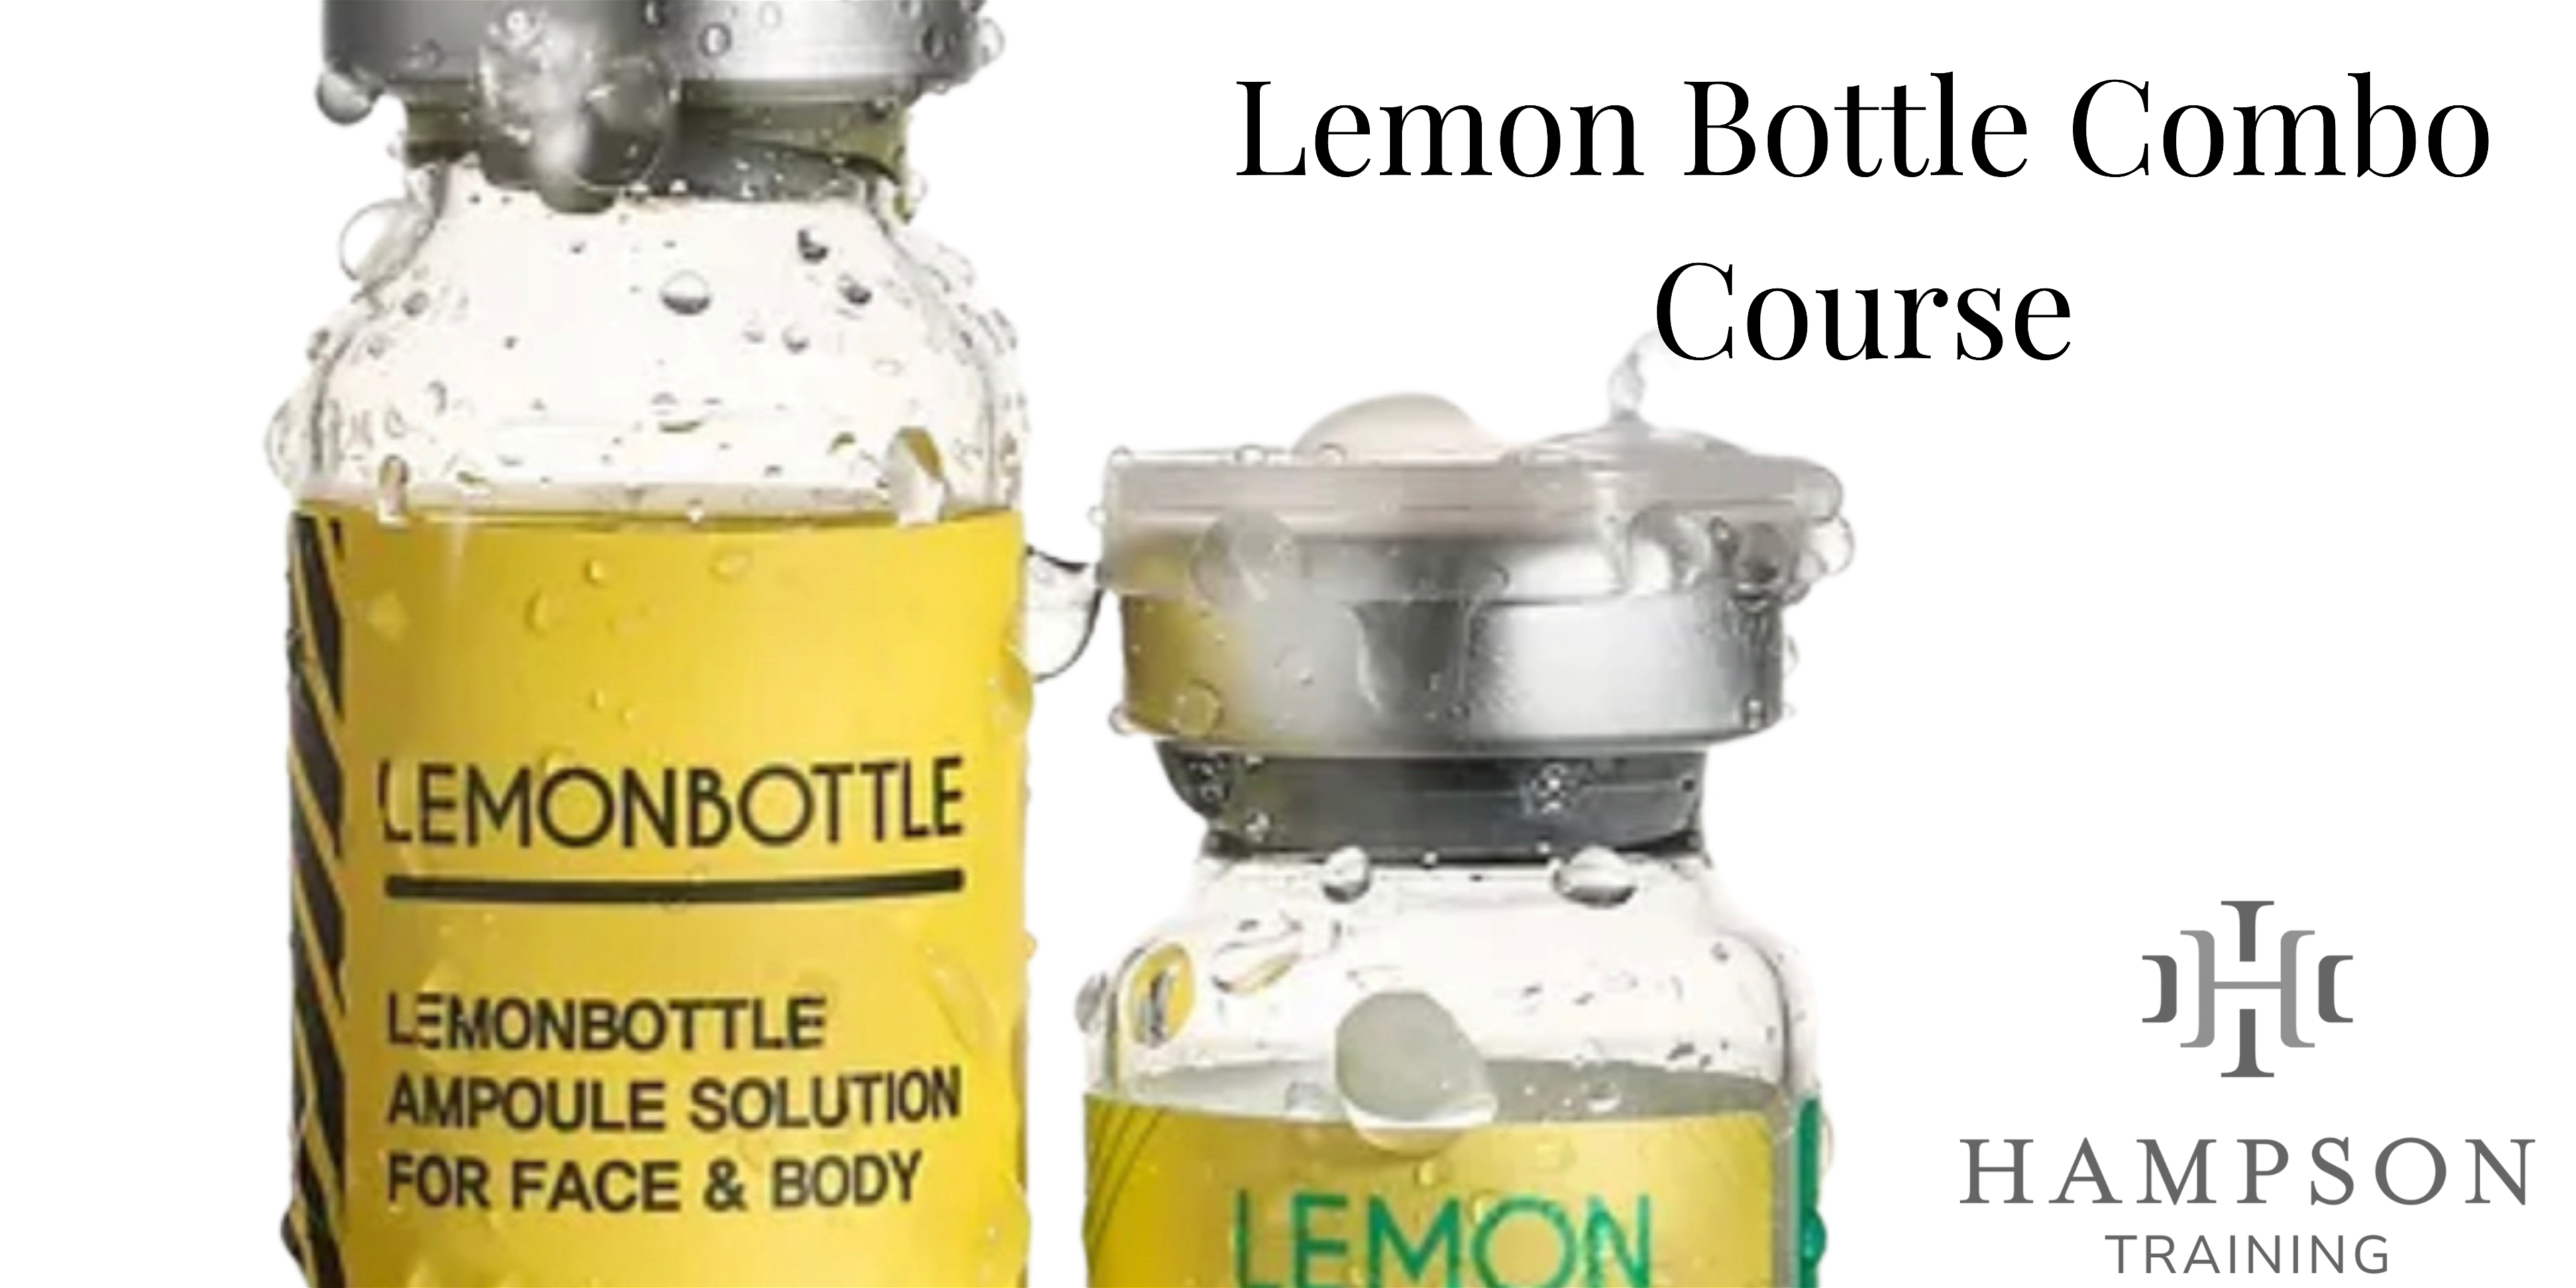 Lemon Bottle Combo Course 